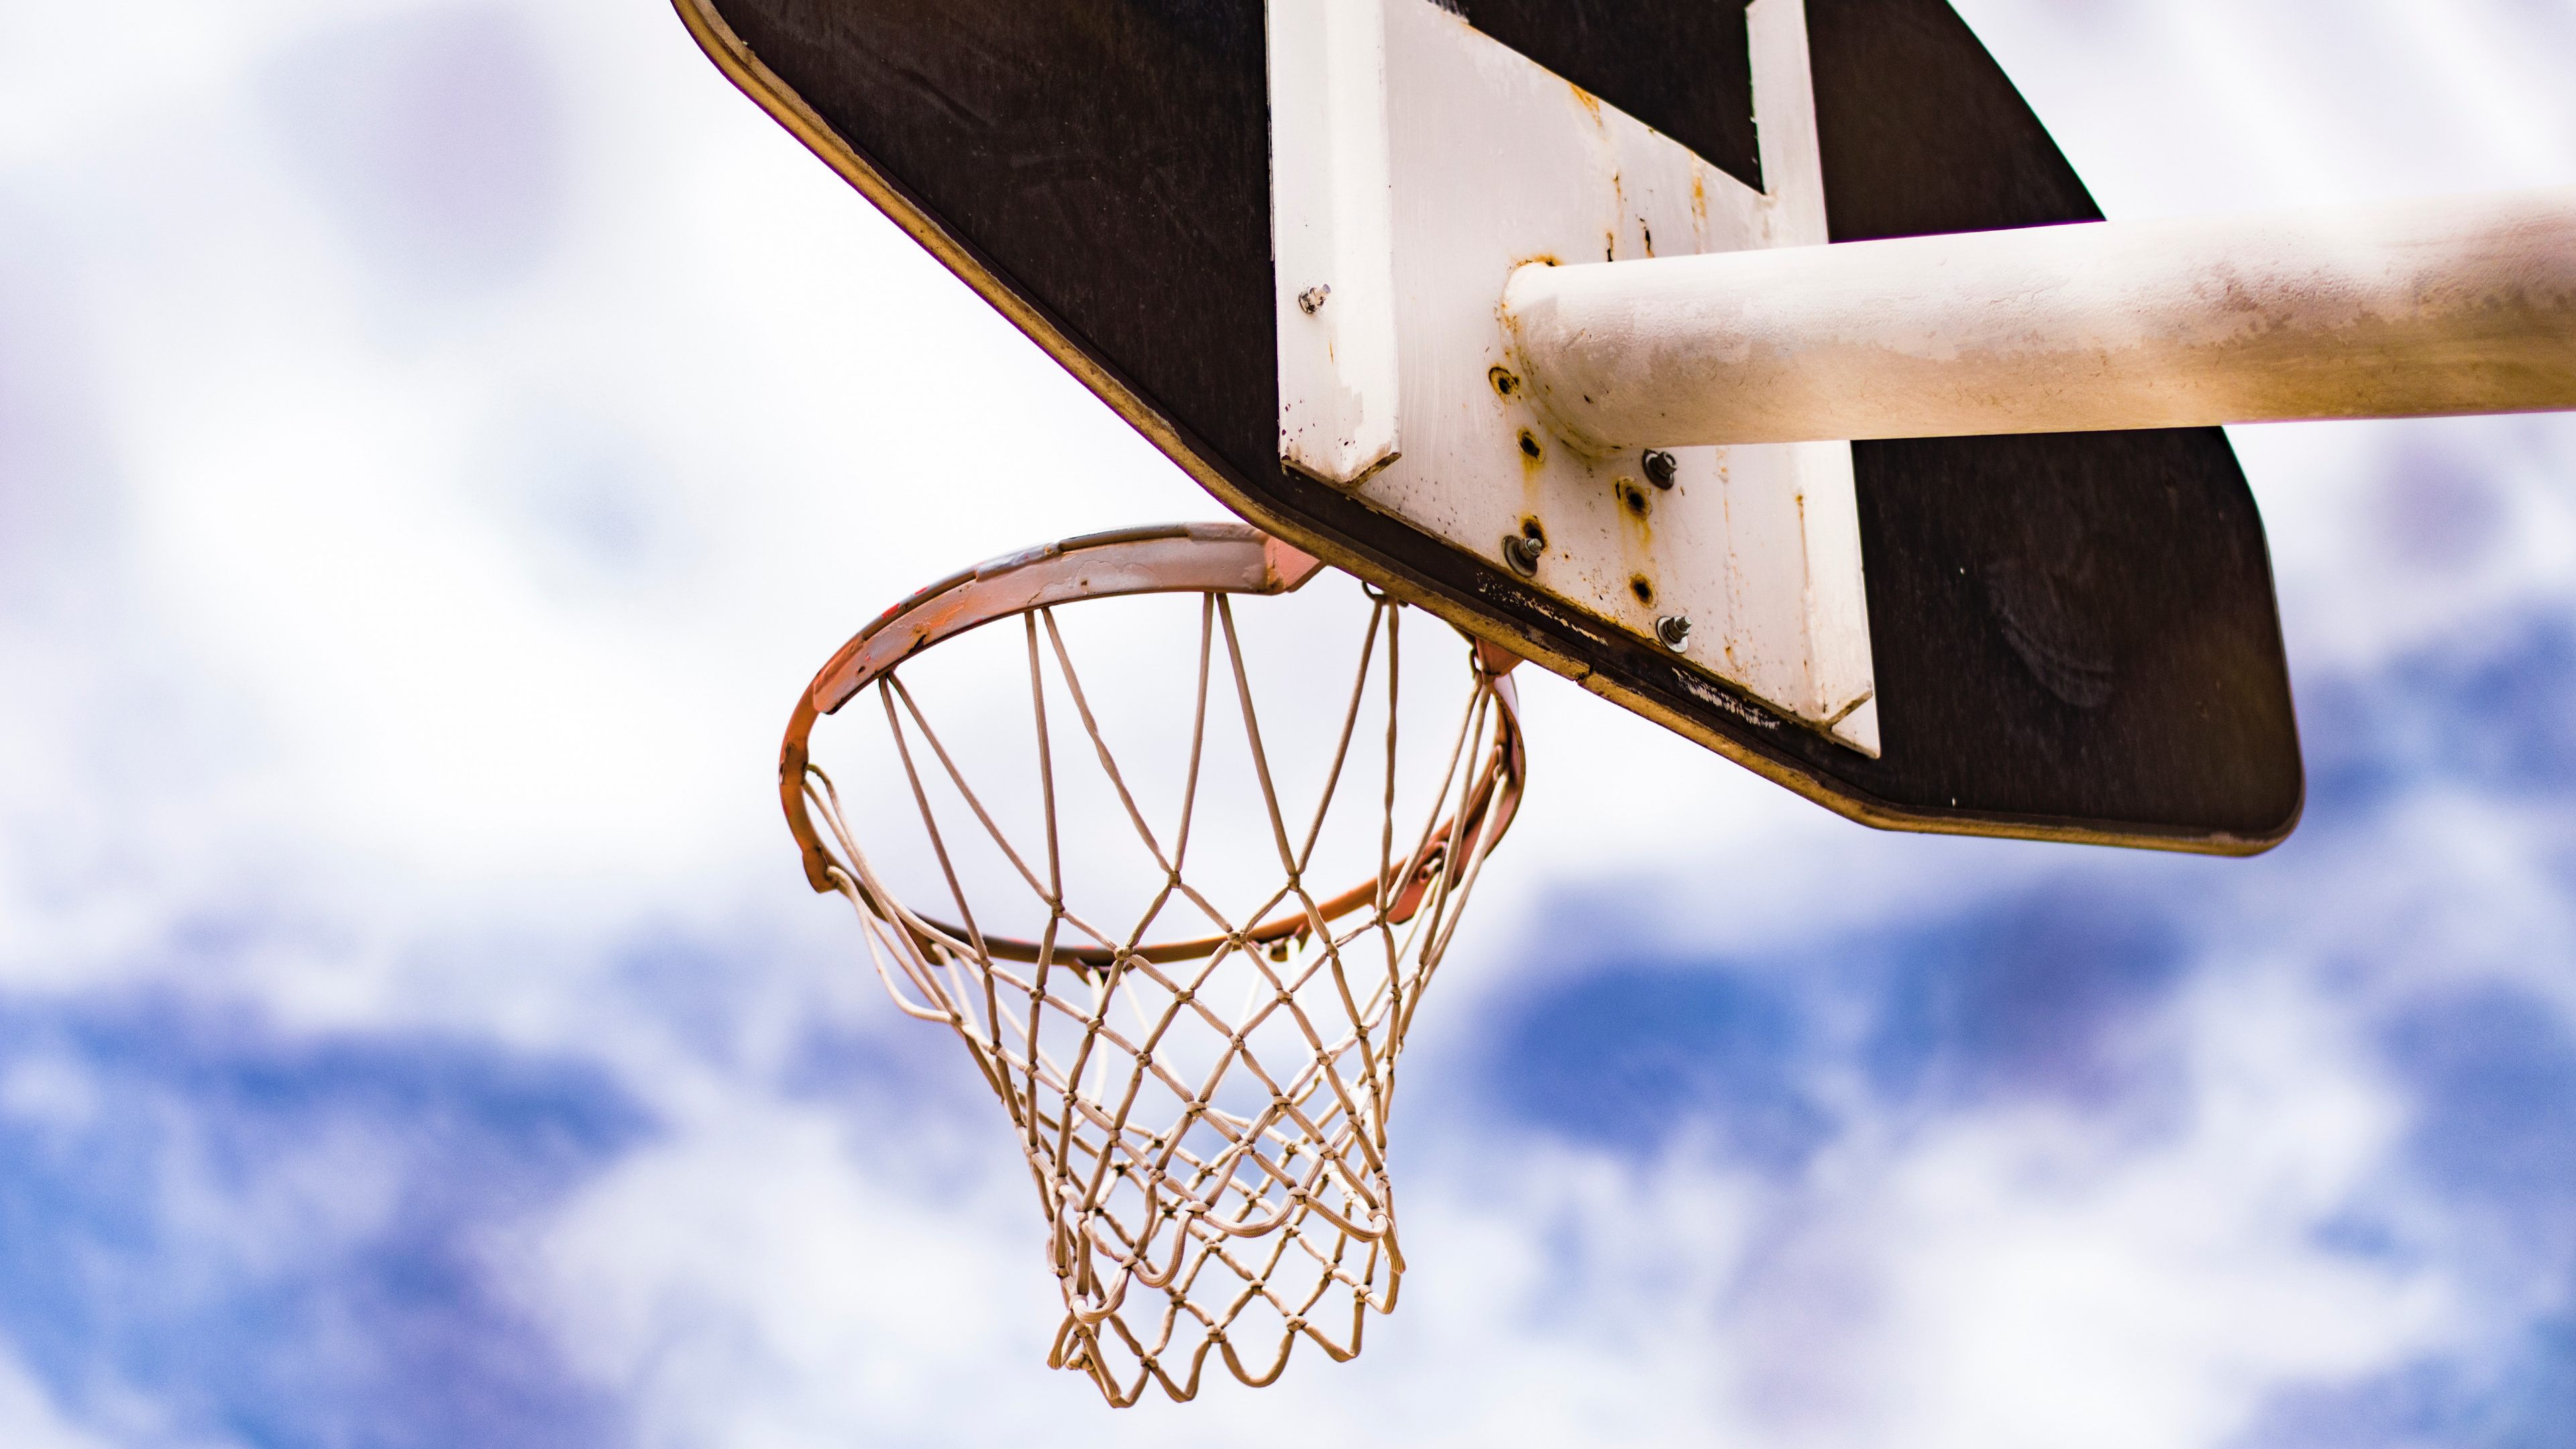 White Basketball Hoop Under Blue Sky During Daytime. Wallpaper in 3840x2160 Resolution